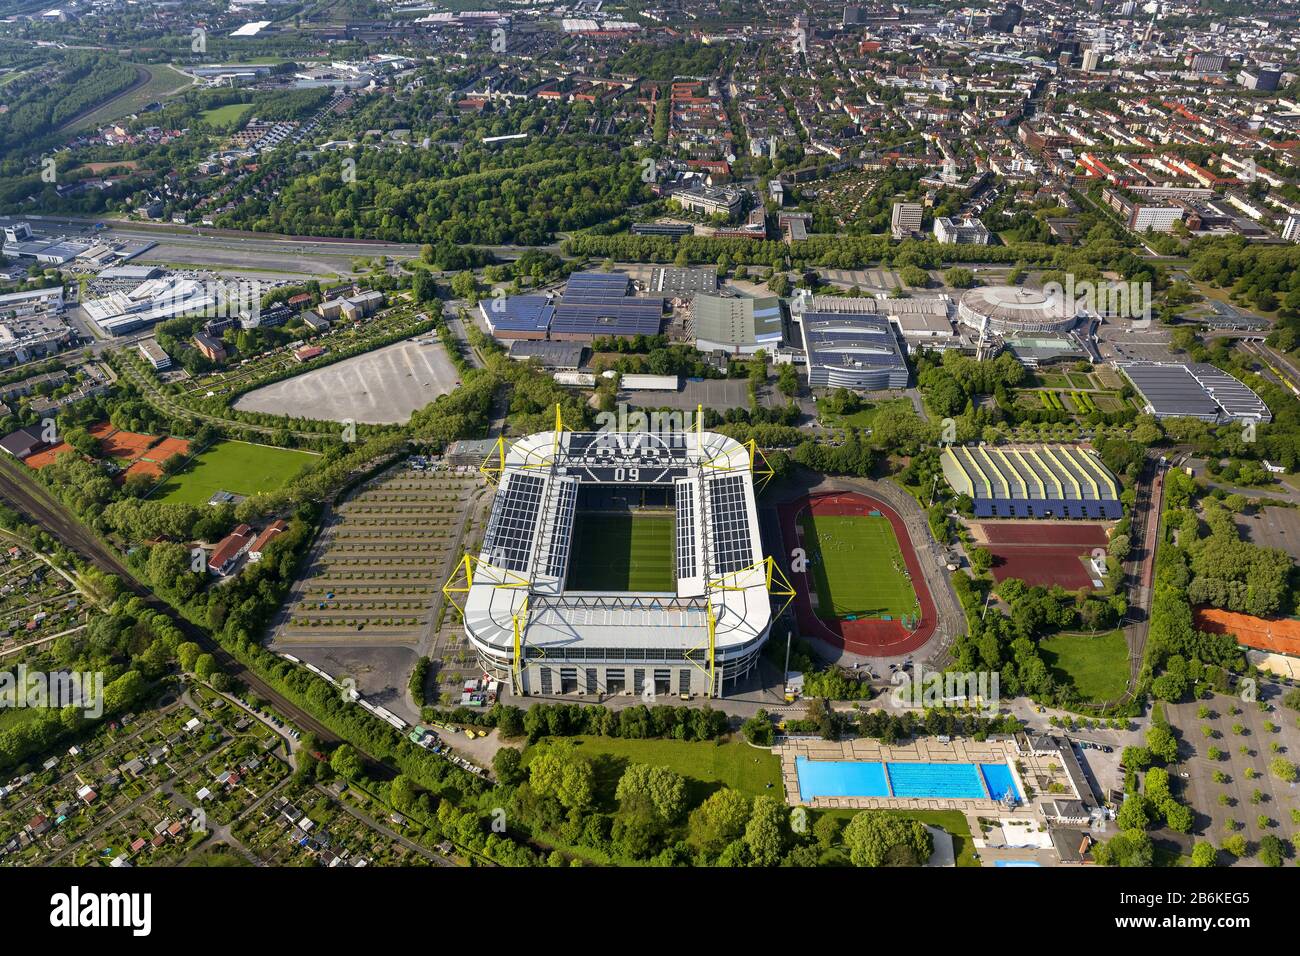 Borusseum, the Signal Iduna Park stadium of Borussia Dortmund, 04.05.2014, aerial view, Germany, North Rhine-Westphalia, Ruhr Area, Dortmund Stock Photo